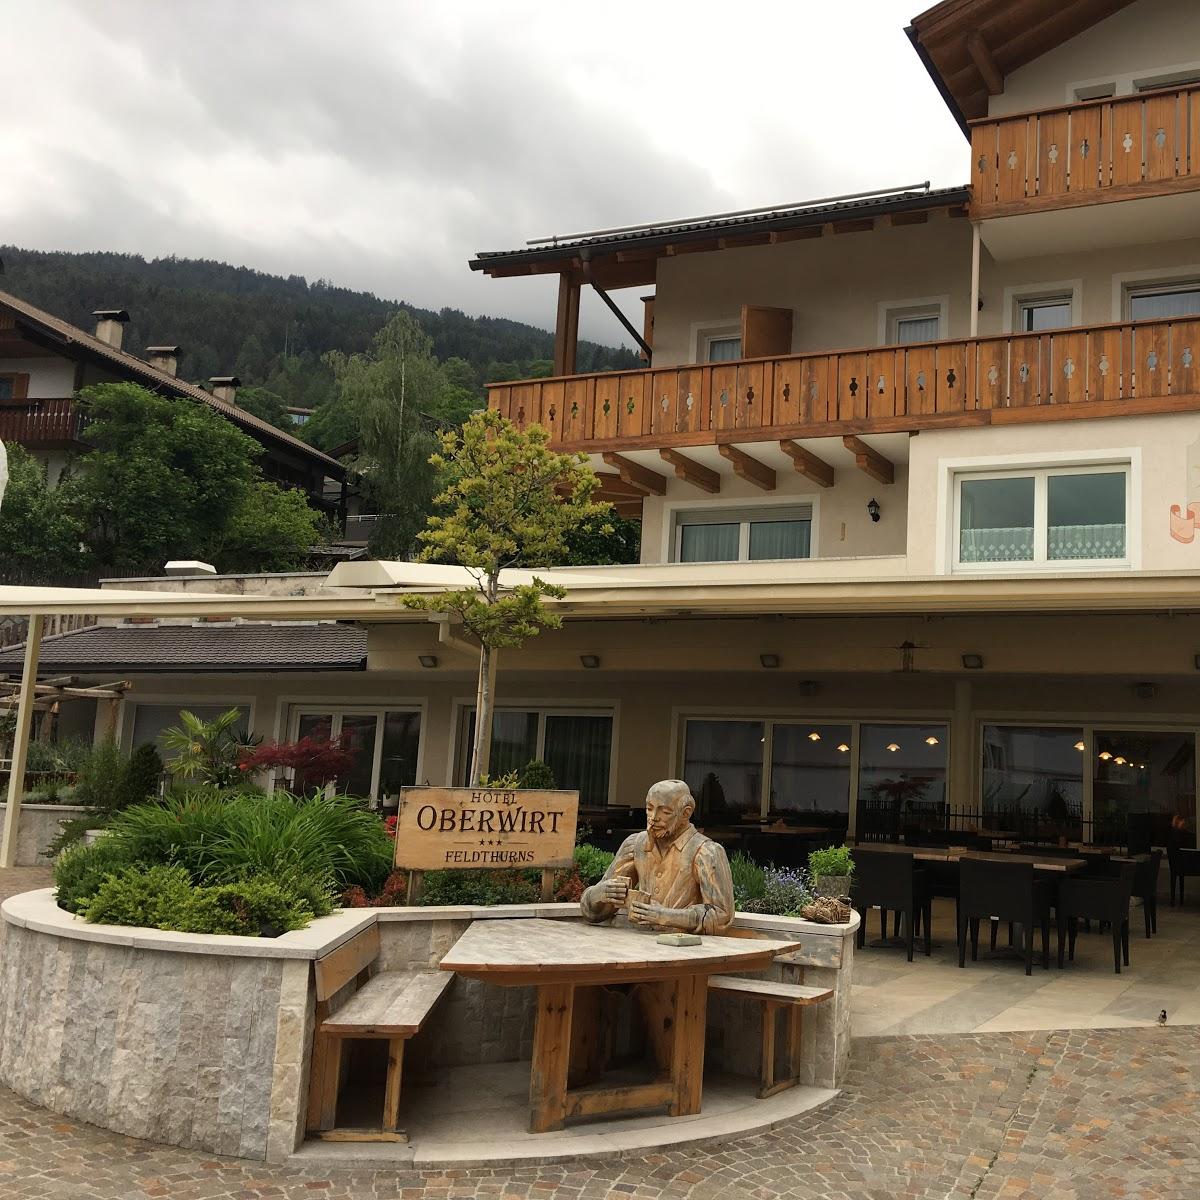 Restaurant "Hotel Oberwirt" in Feldthurns